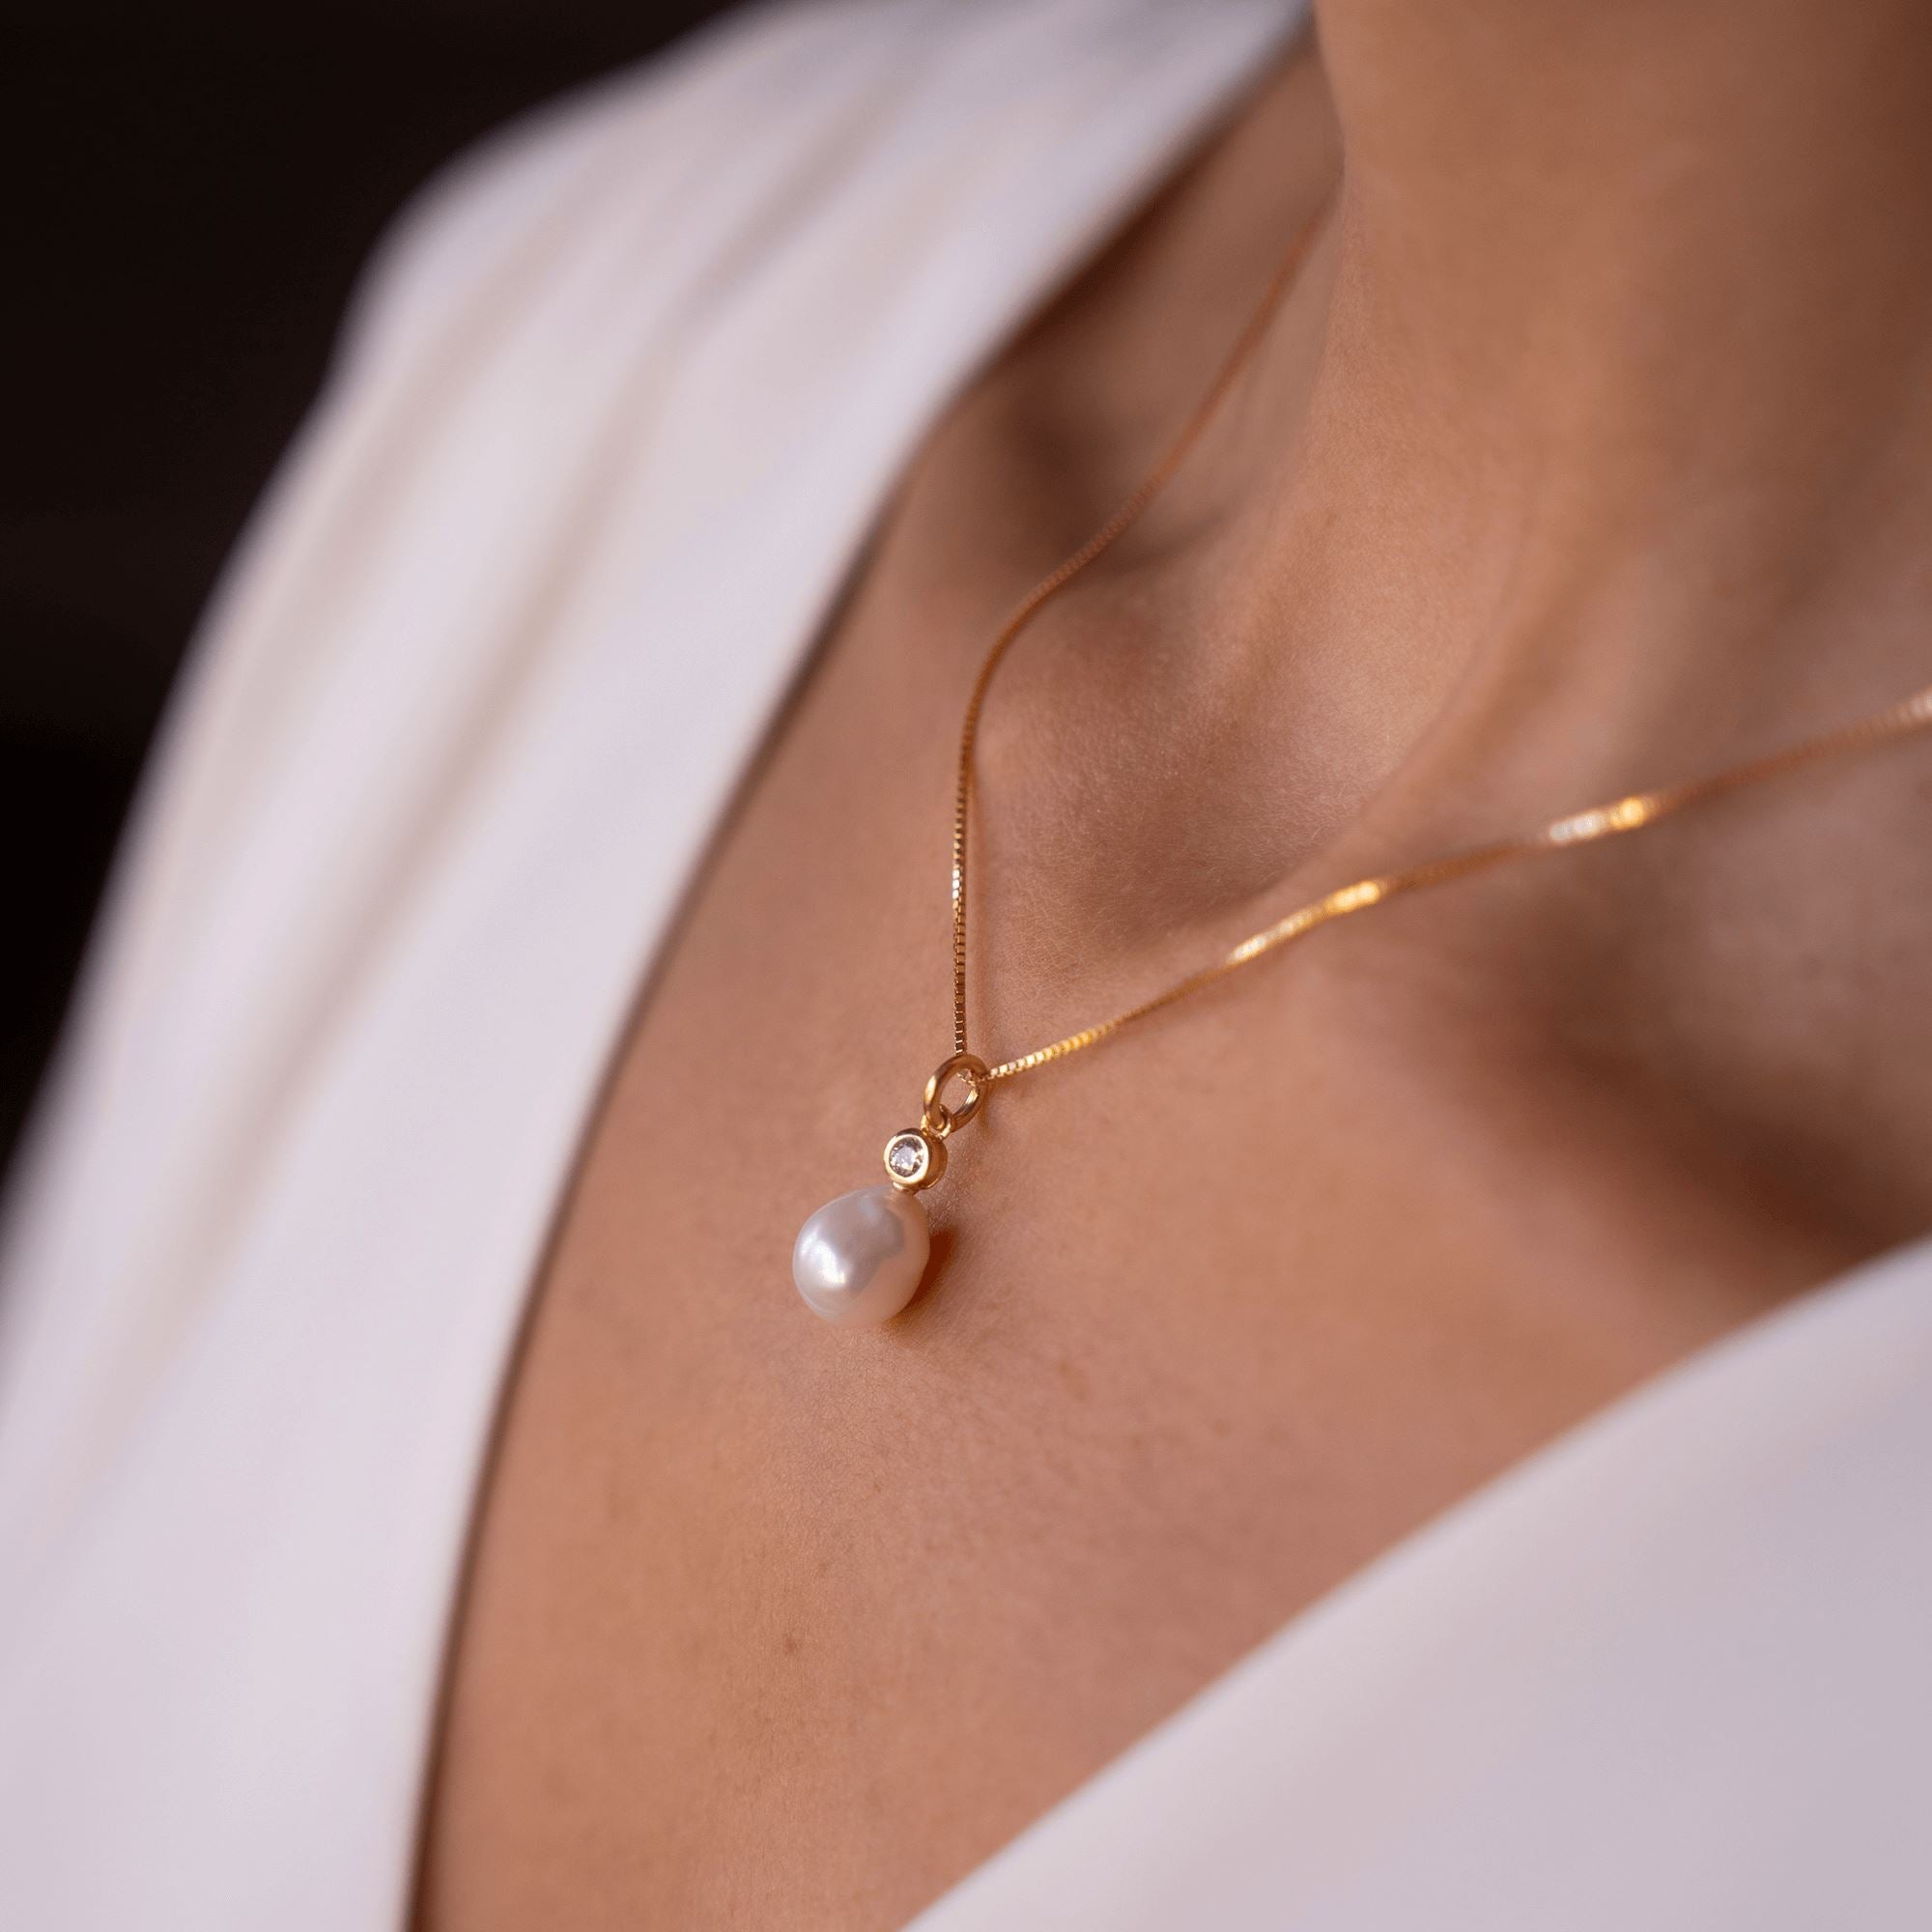 Pearl Pendant Box Chain Necklace - Mantarraya NYC